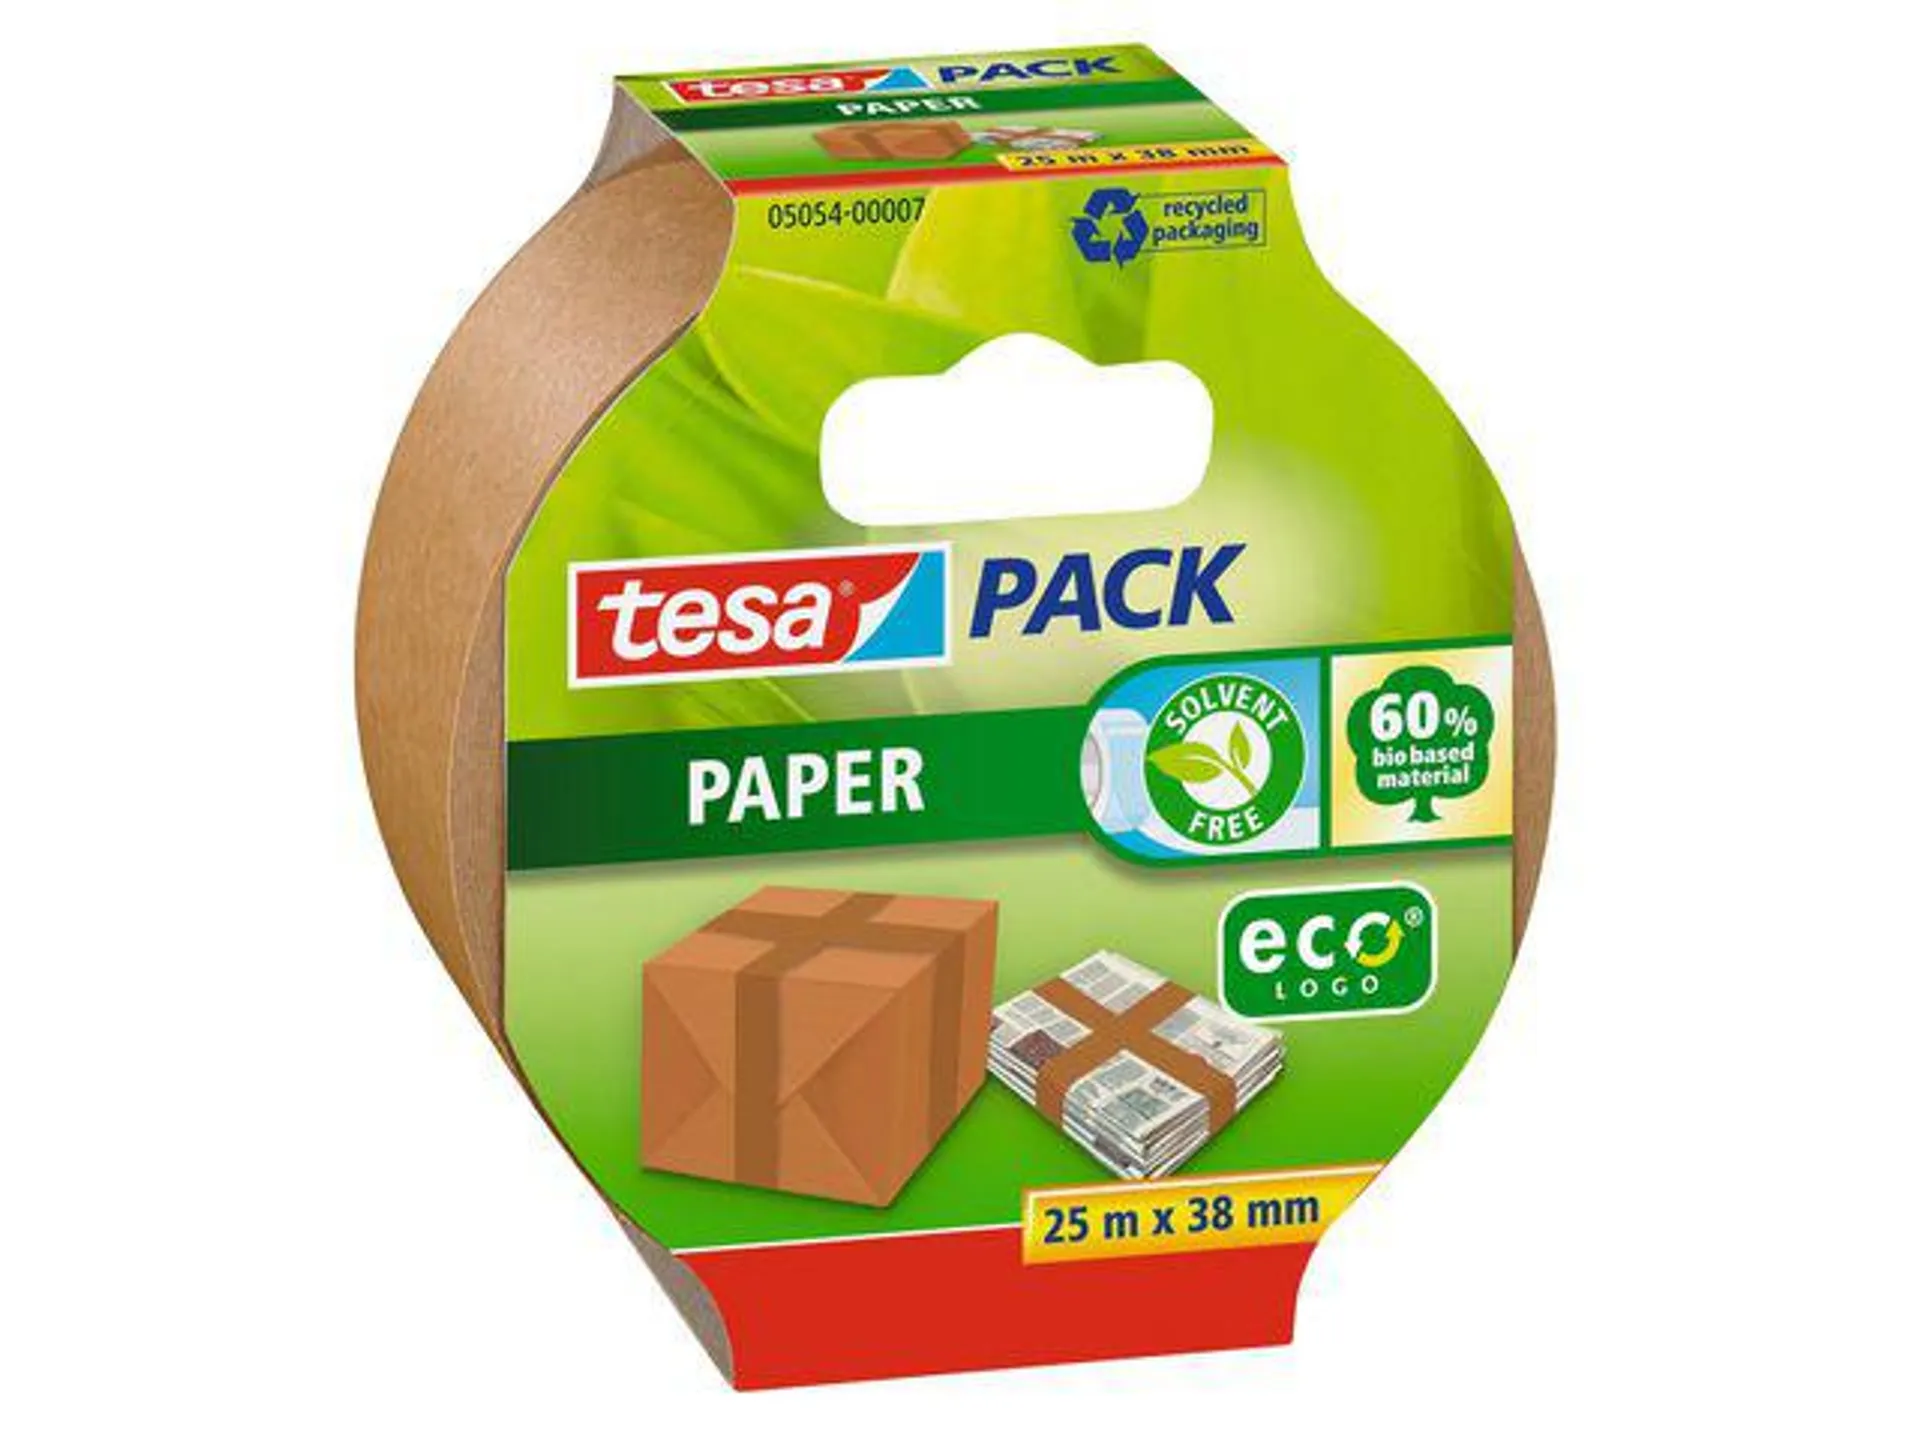 TESA pack Eco Verpakkingstape Papier, 38 mm x 25 m, Bruin